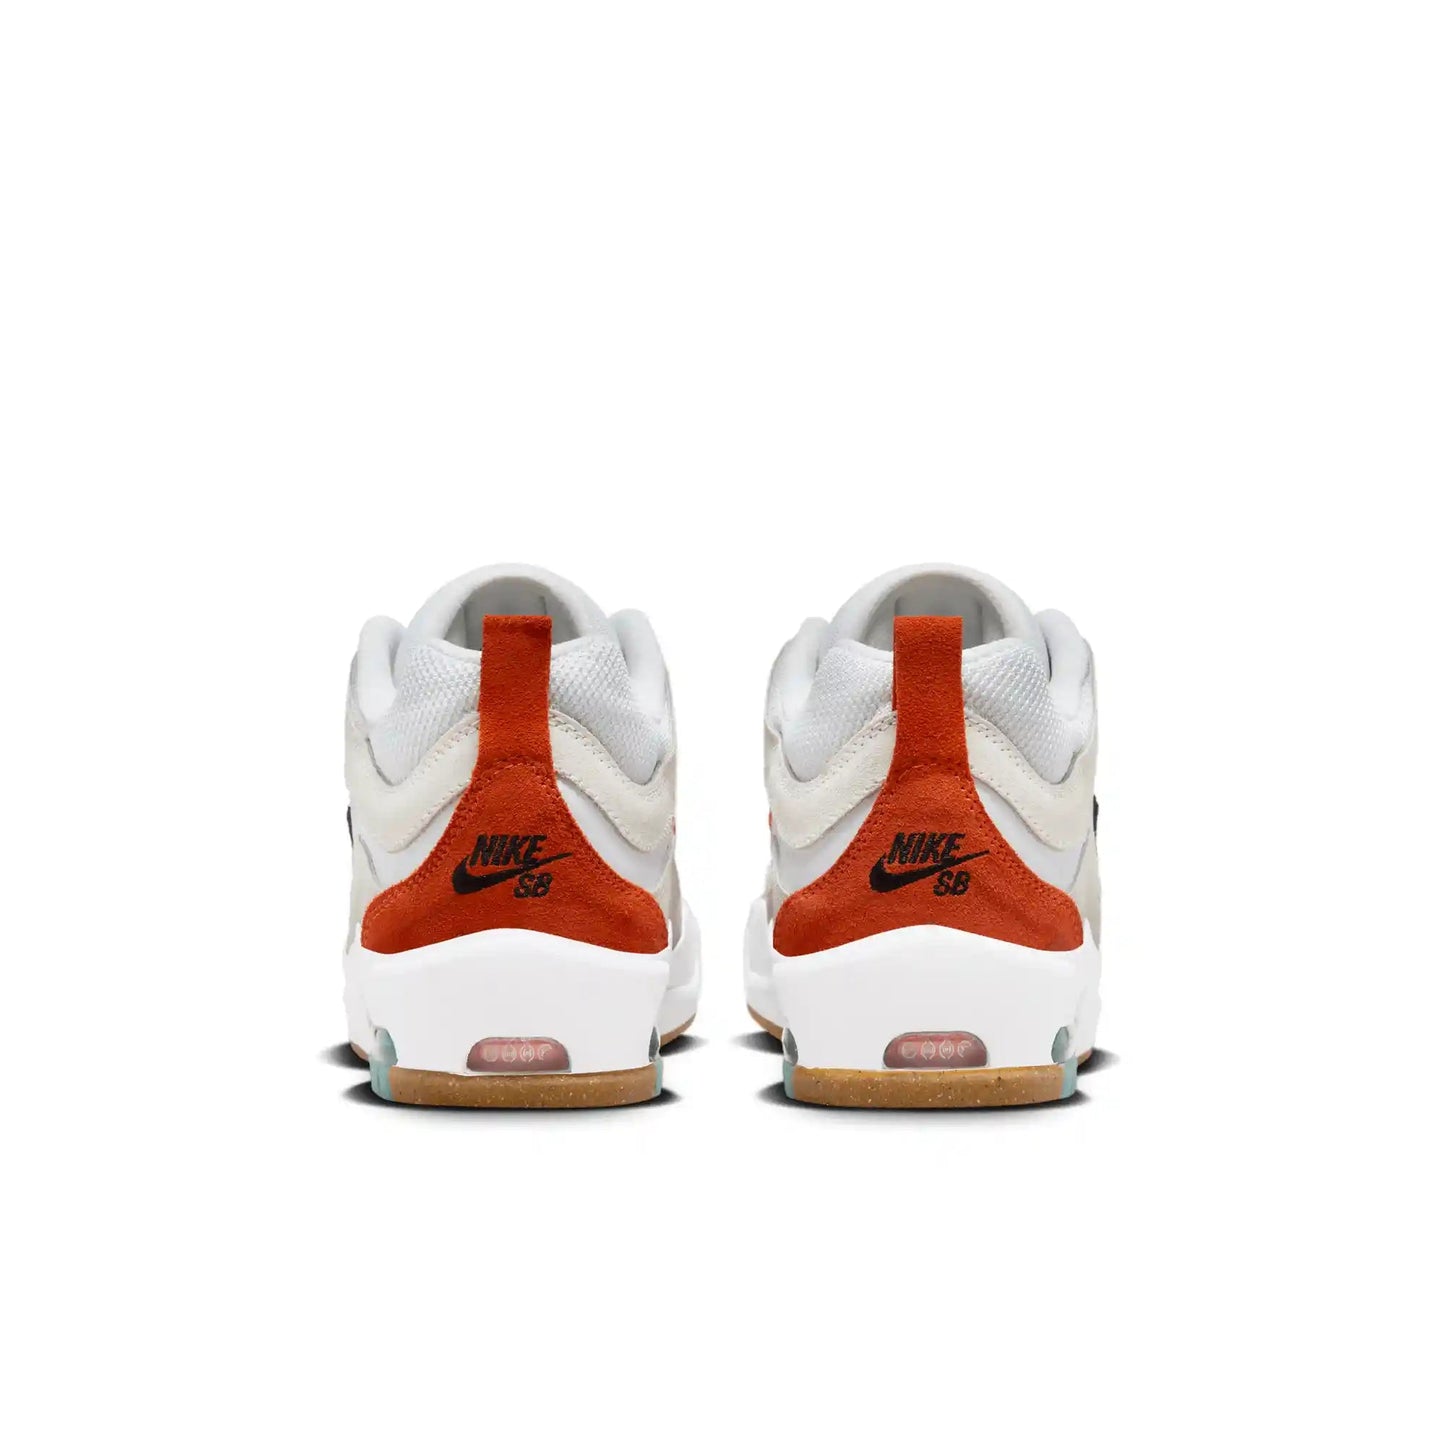 Nike SB Air Max Ishod, white/orange-summit white-black - Tiki Room Skateboards - 4